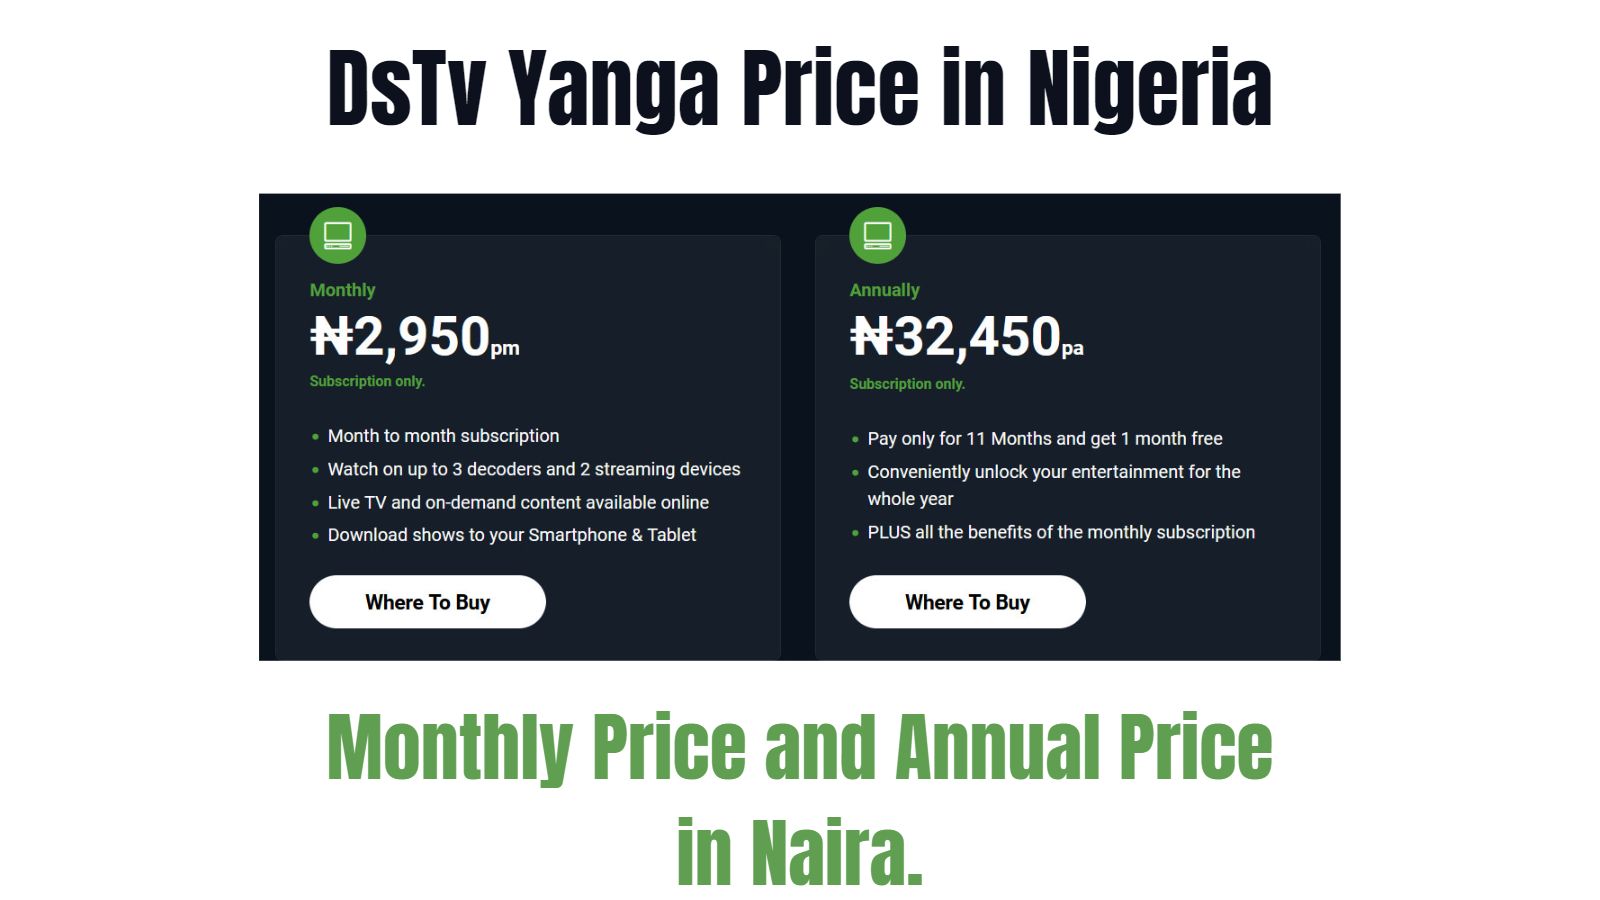 DsTv Yanga Subscription Price in Nigeria